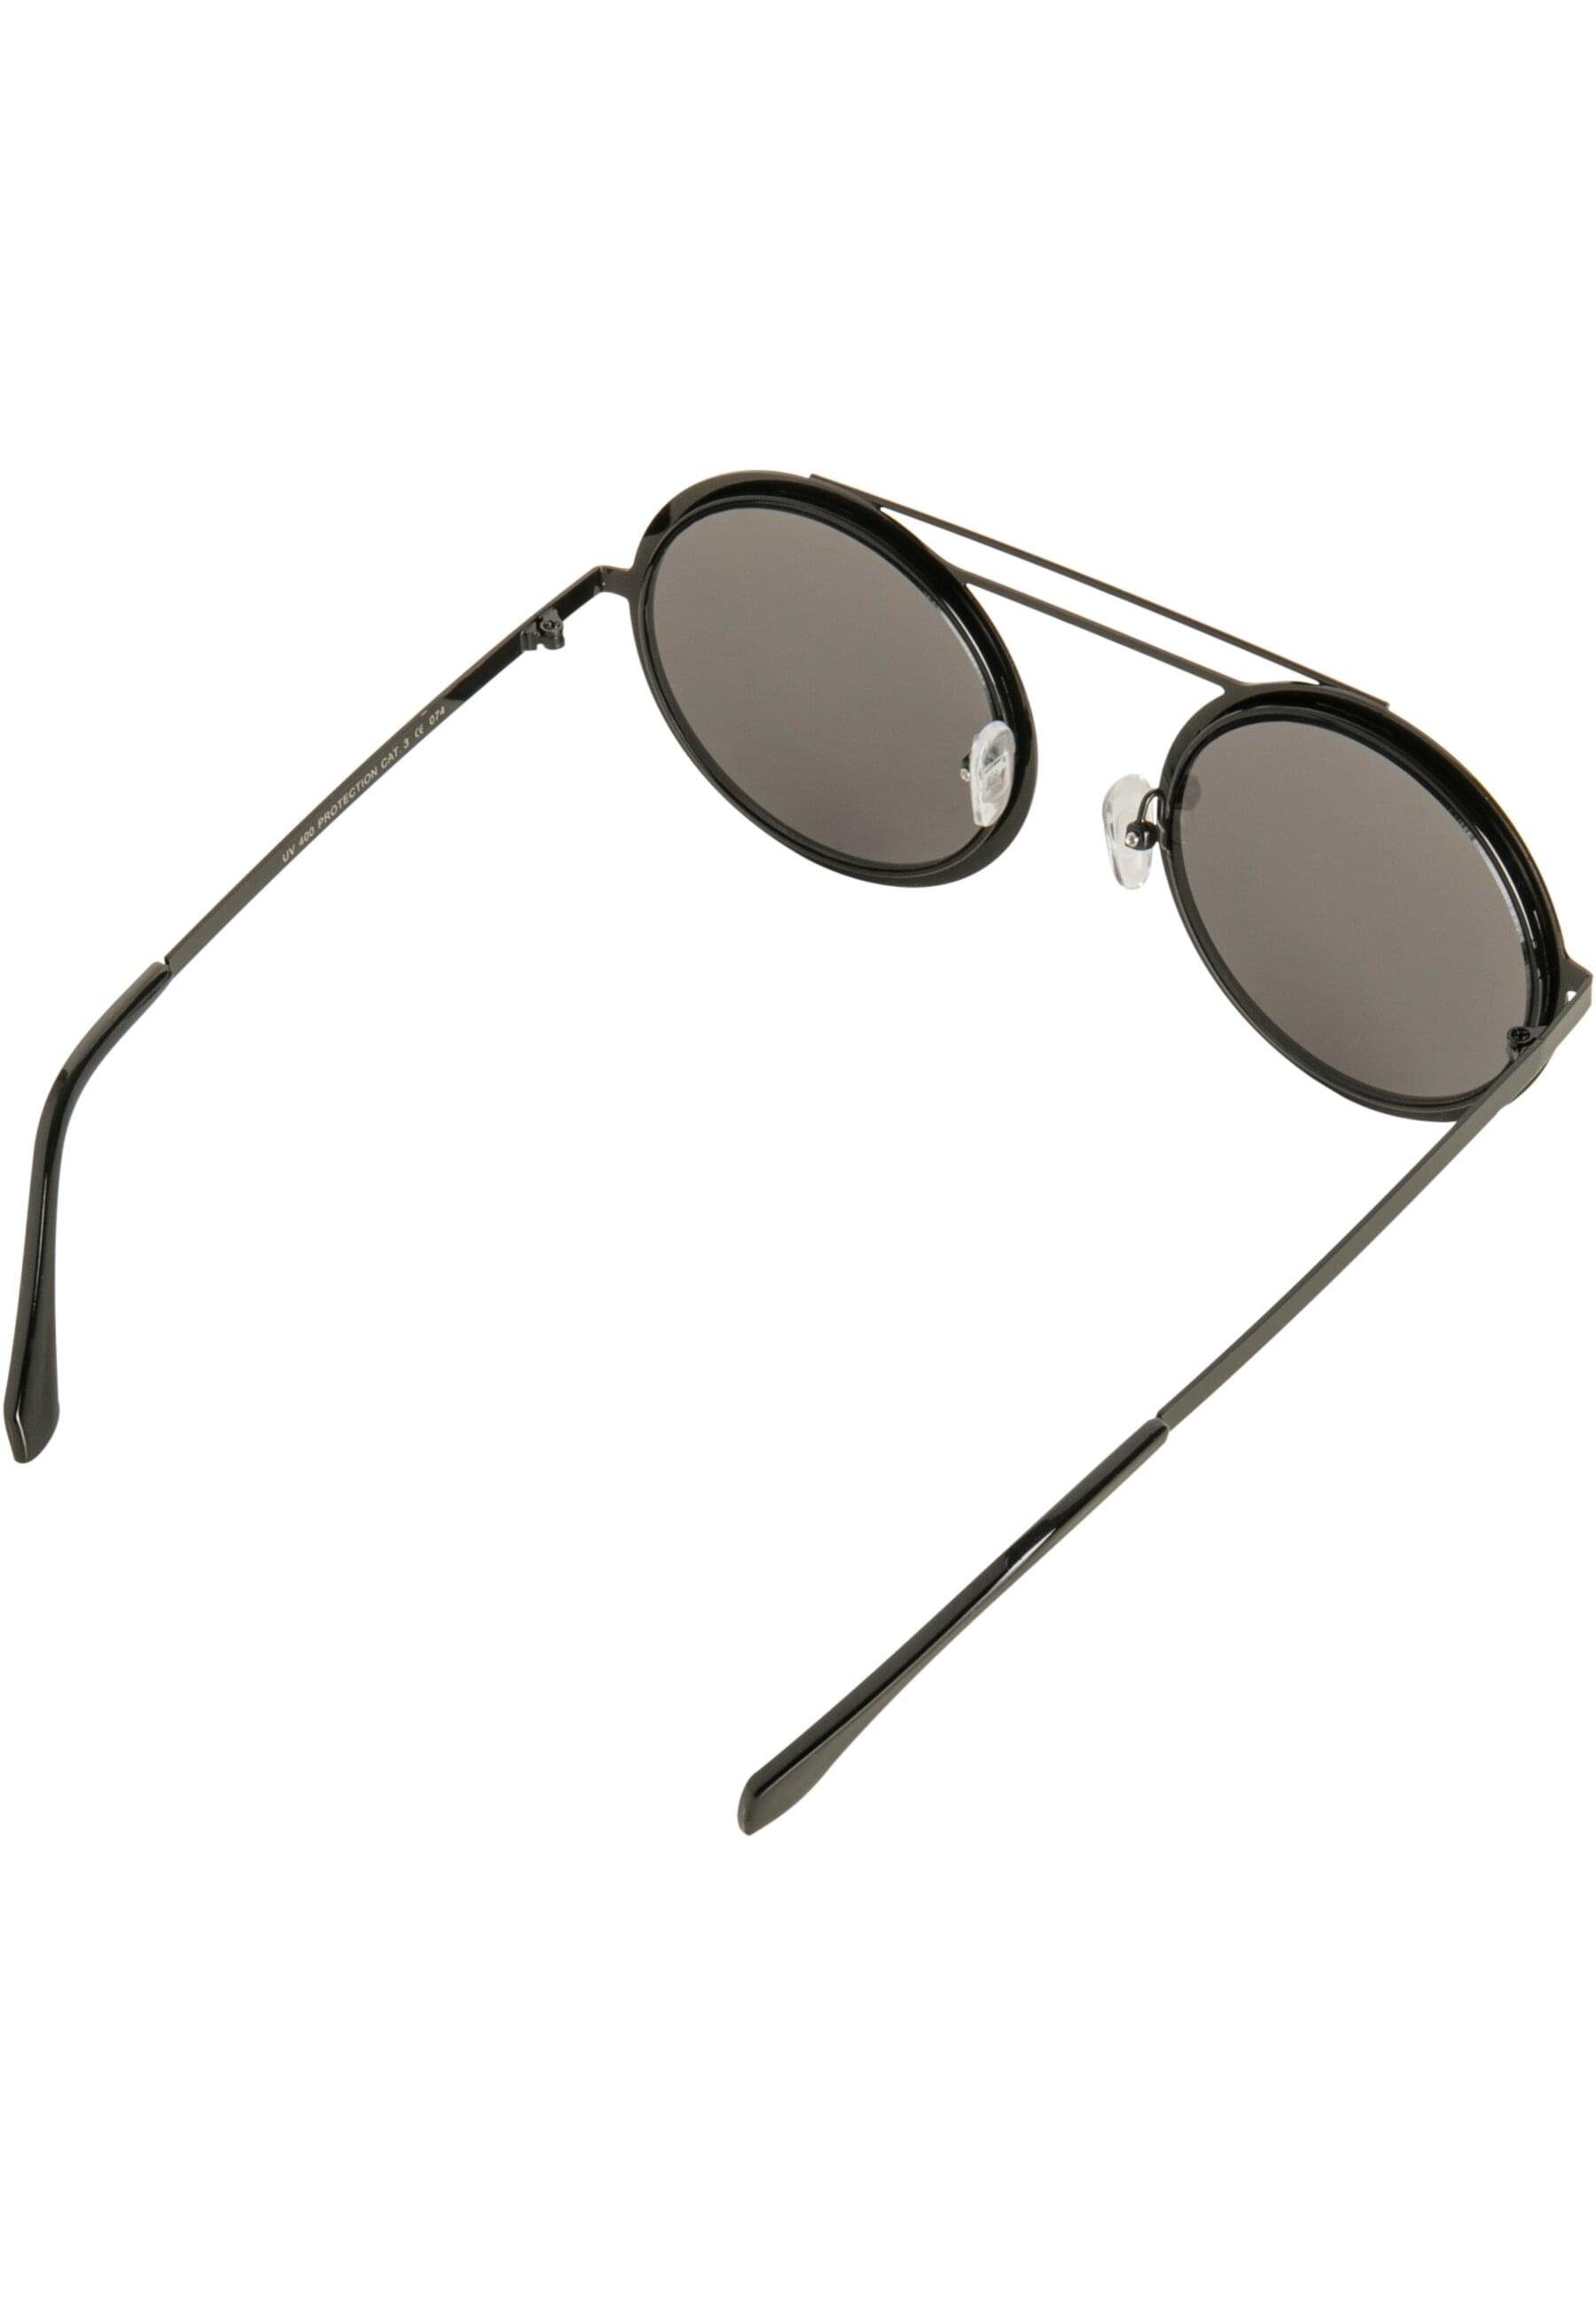 Sonnenbrille Chain Sunglasses Unisex CLASSICS URBAN 104 black/black